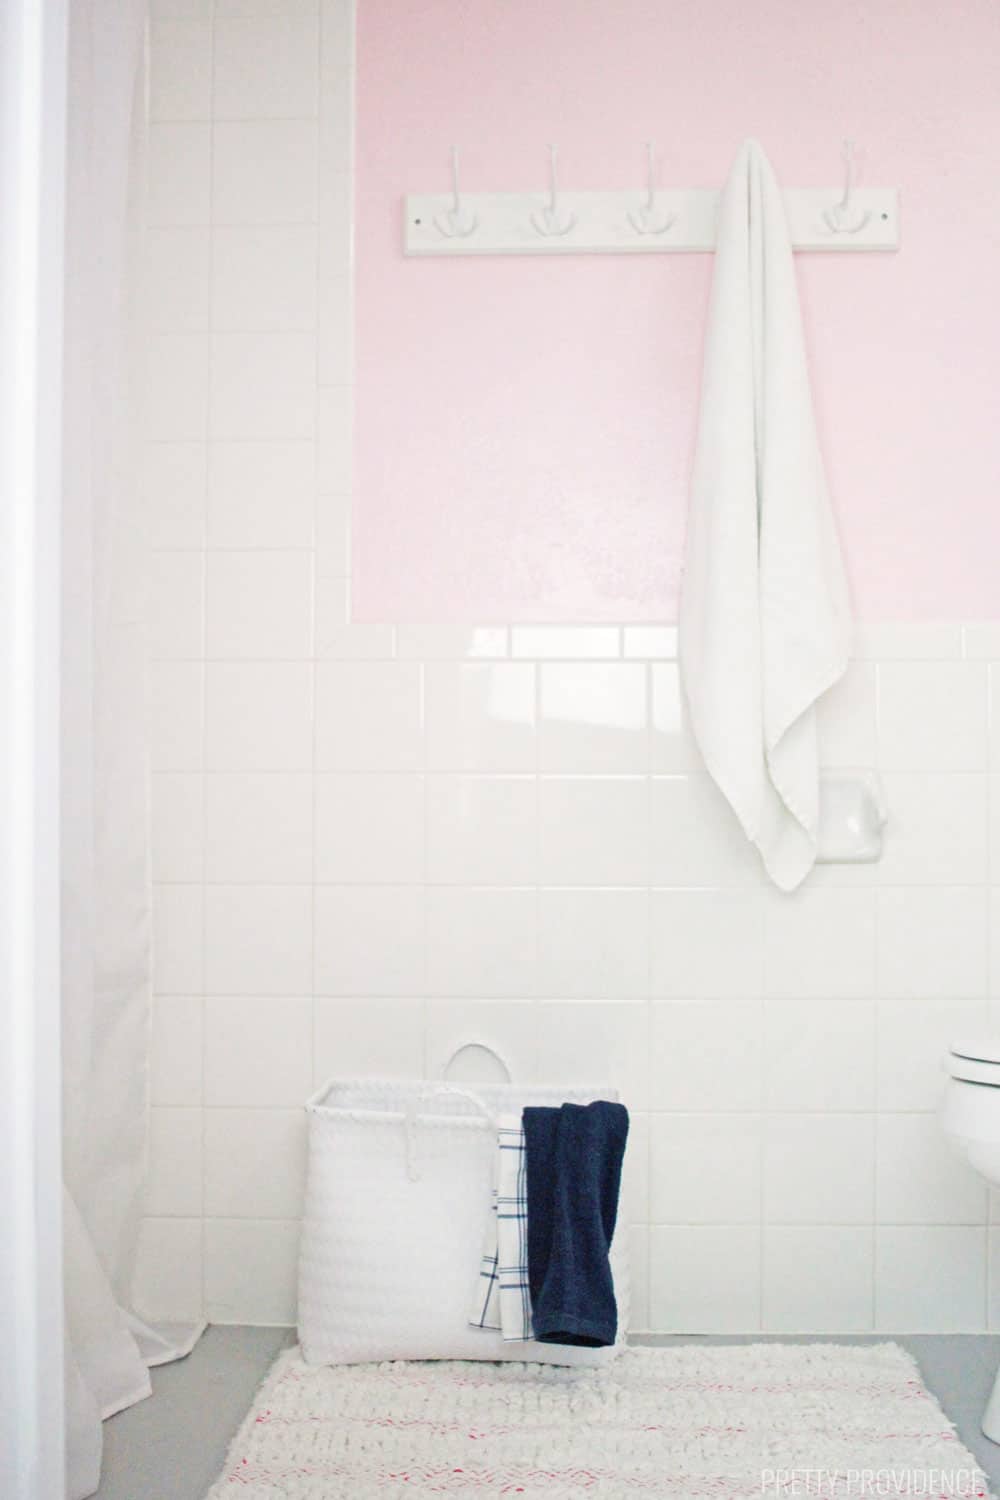 Blush pink bathroom and gray floor.